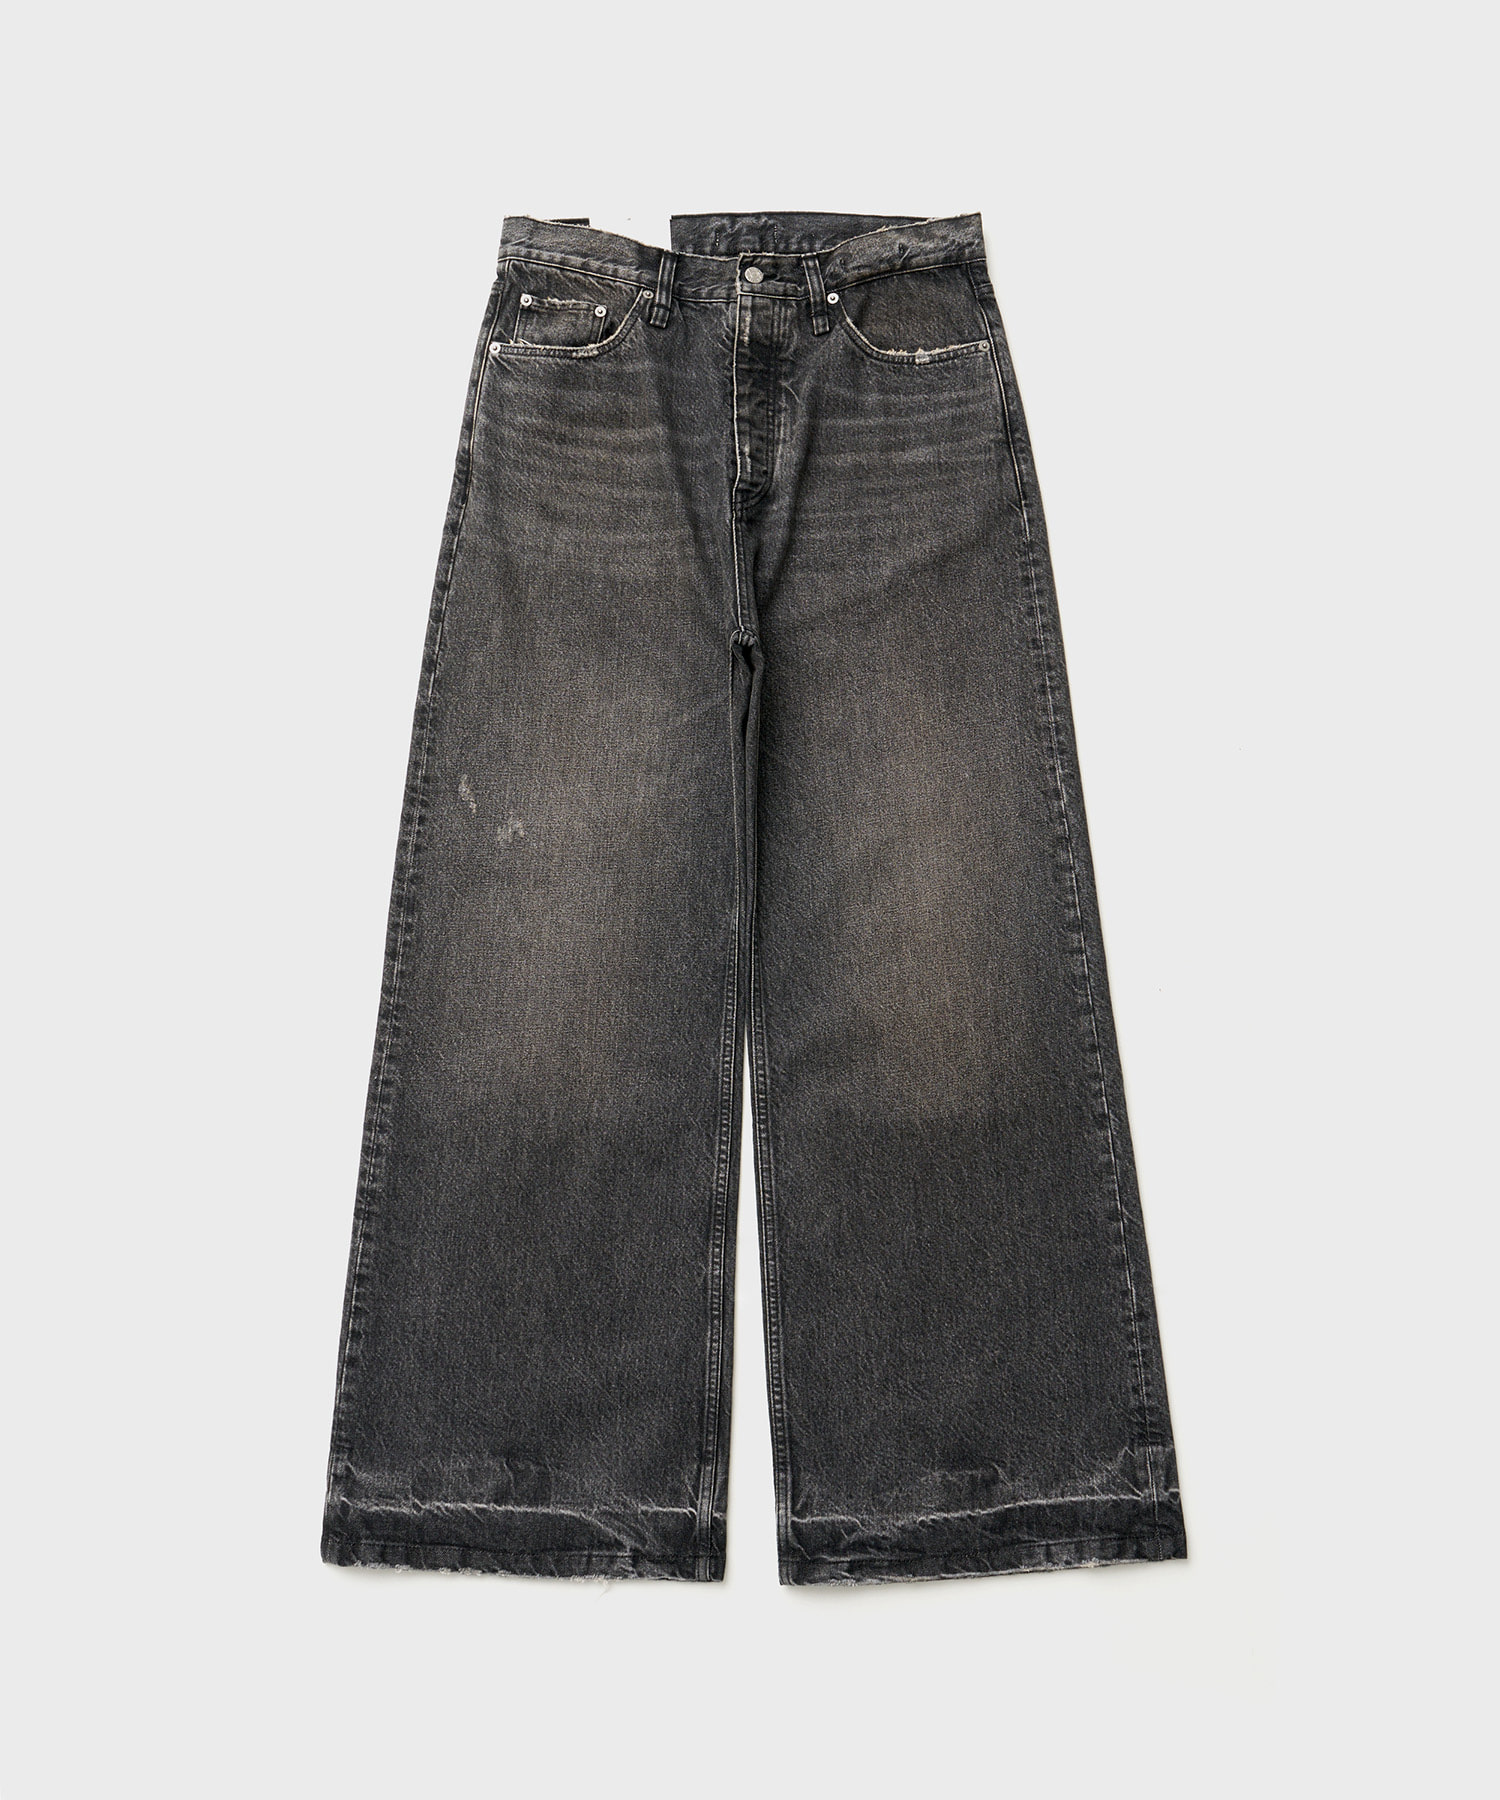 (w) Skid Jeans (Heavy Black Vintage)